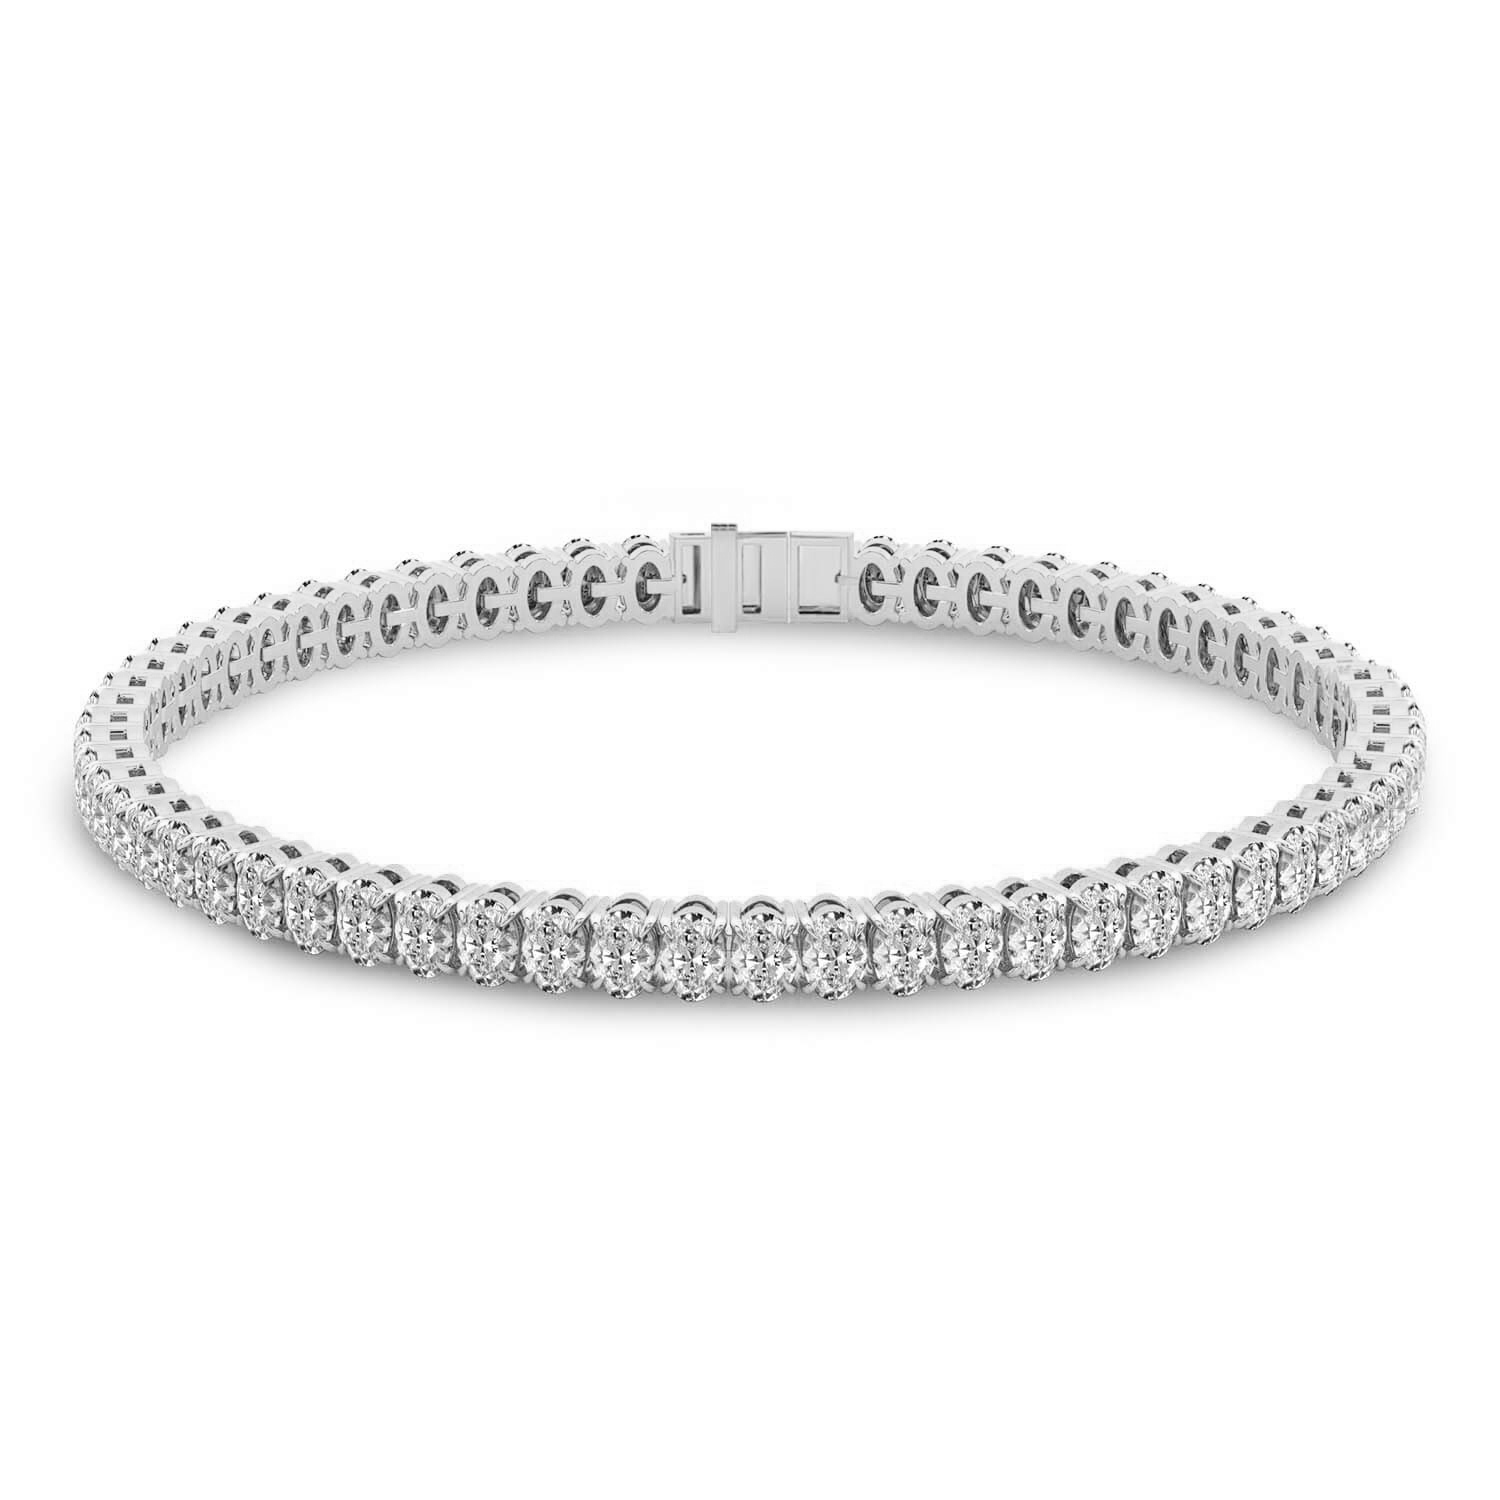 Everlyn Oval Lab Diamond Tennis Bracelet white gold bracelet, small front view